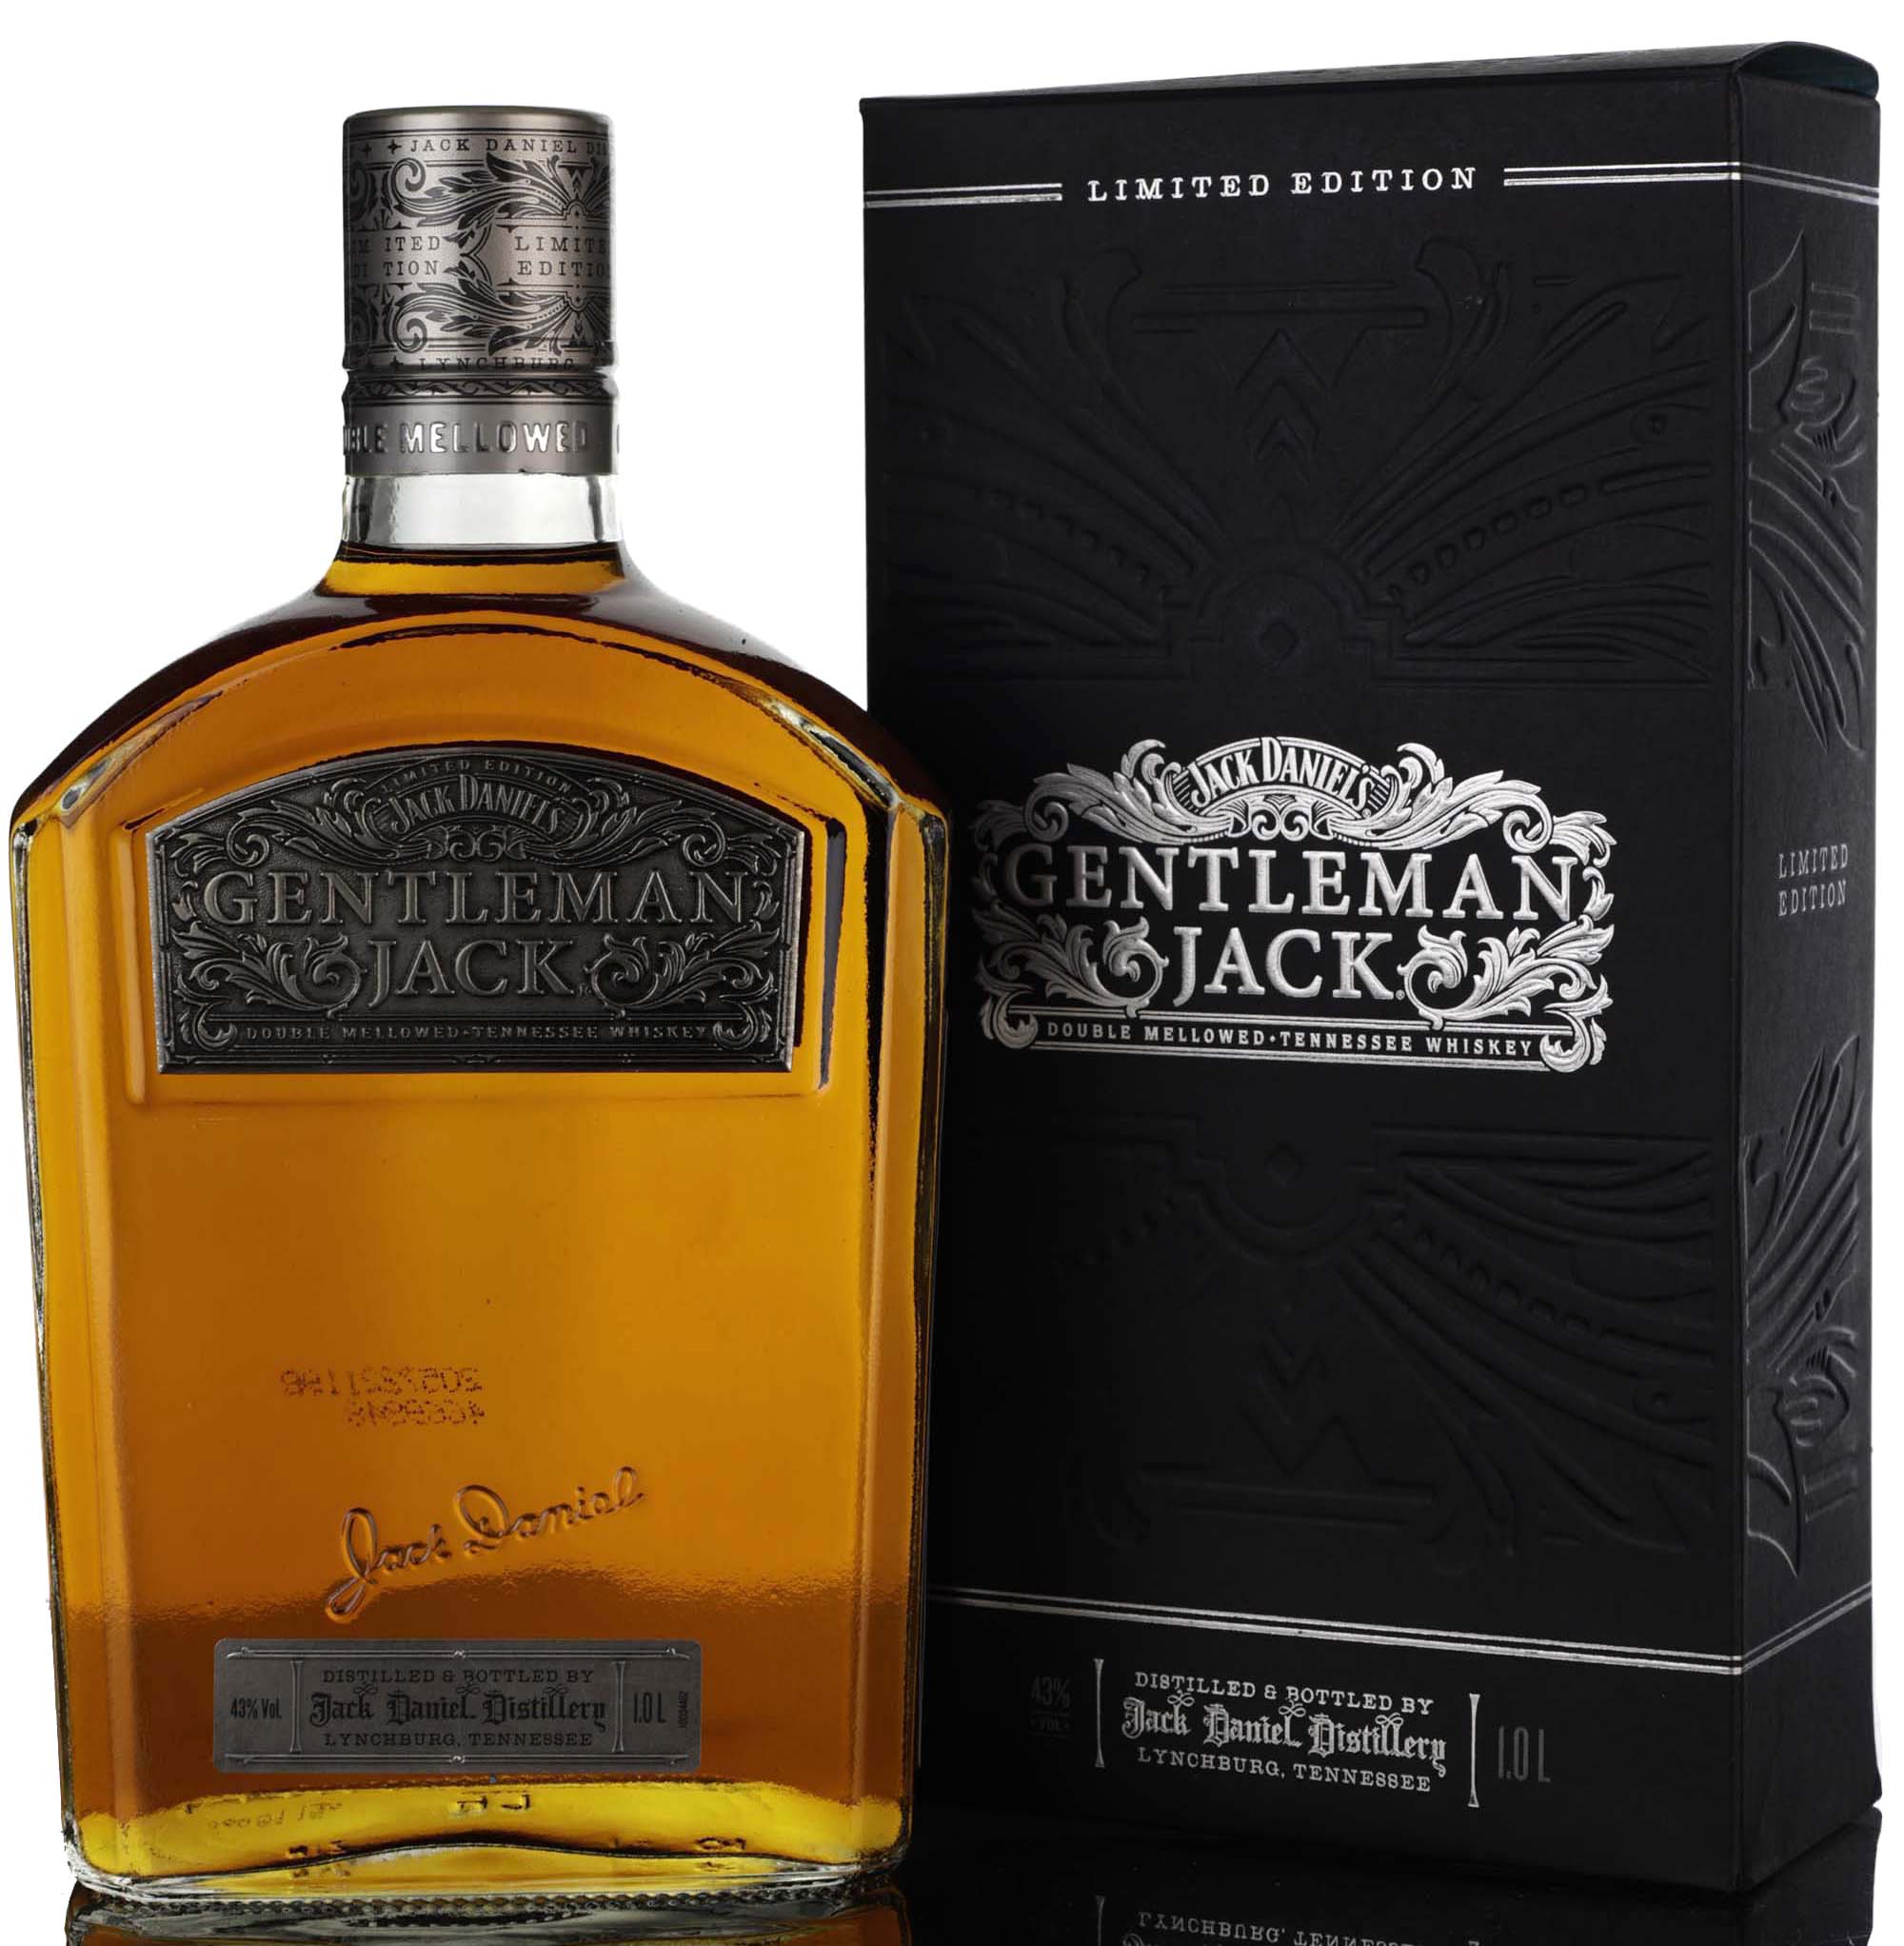 Jack Daniels Gentleman Jack Timepiece - Limited Edition - 1 Litre